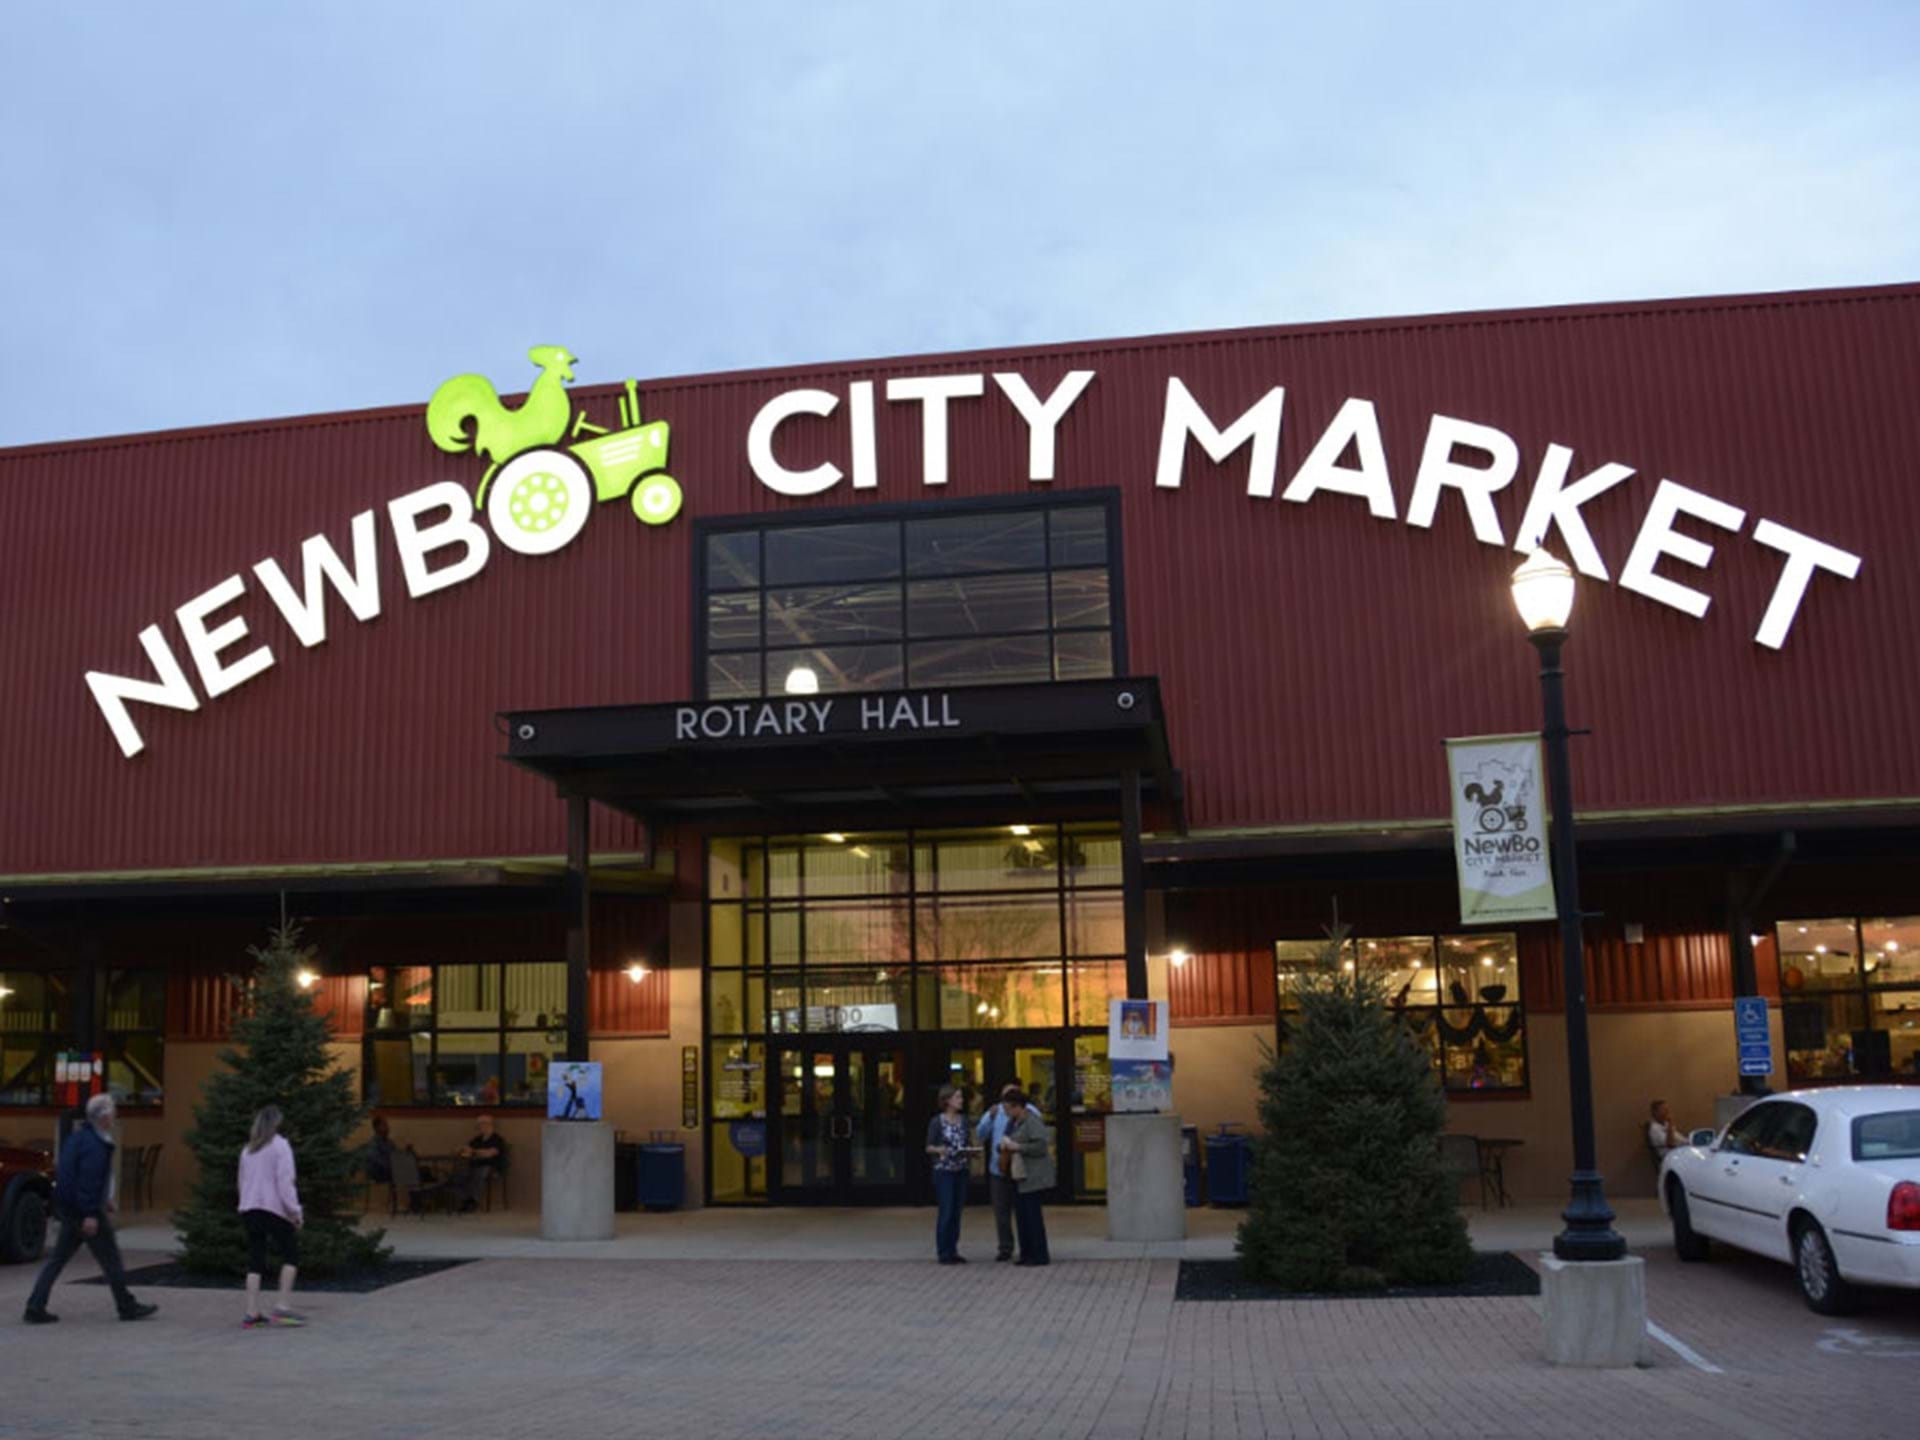 Head on down to the NewBo City Market!